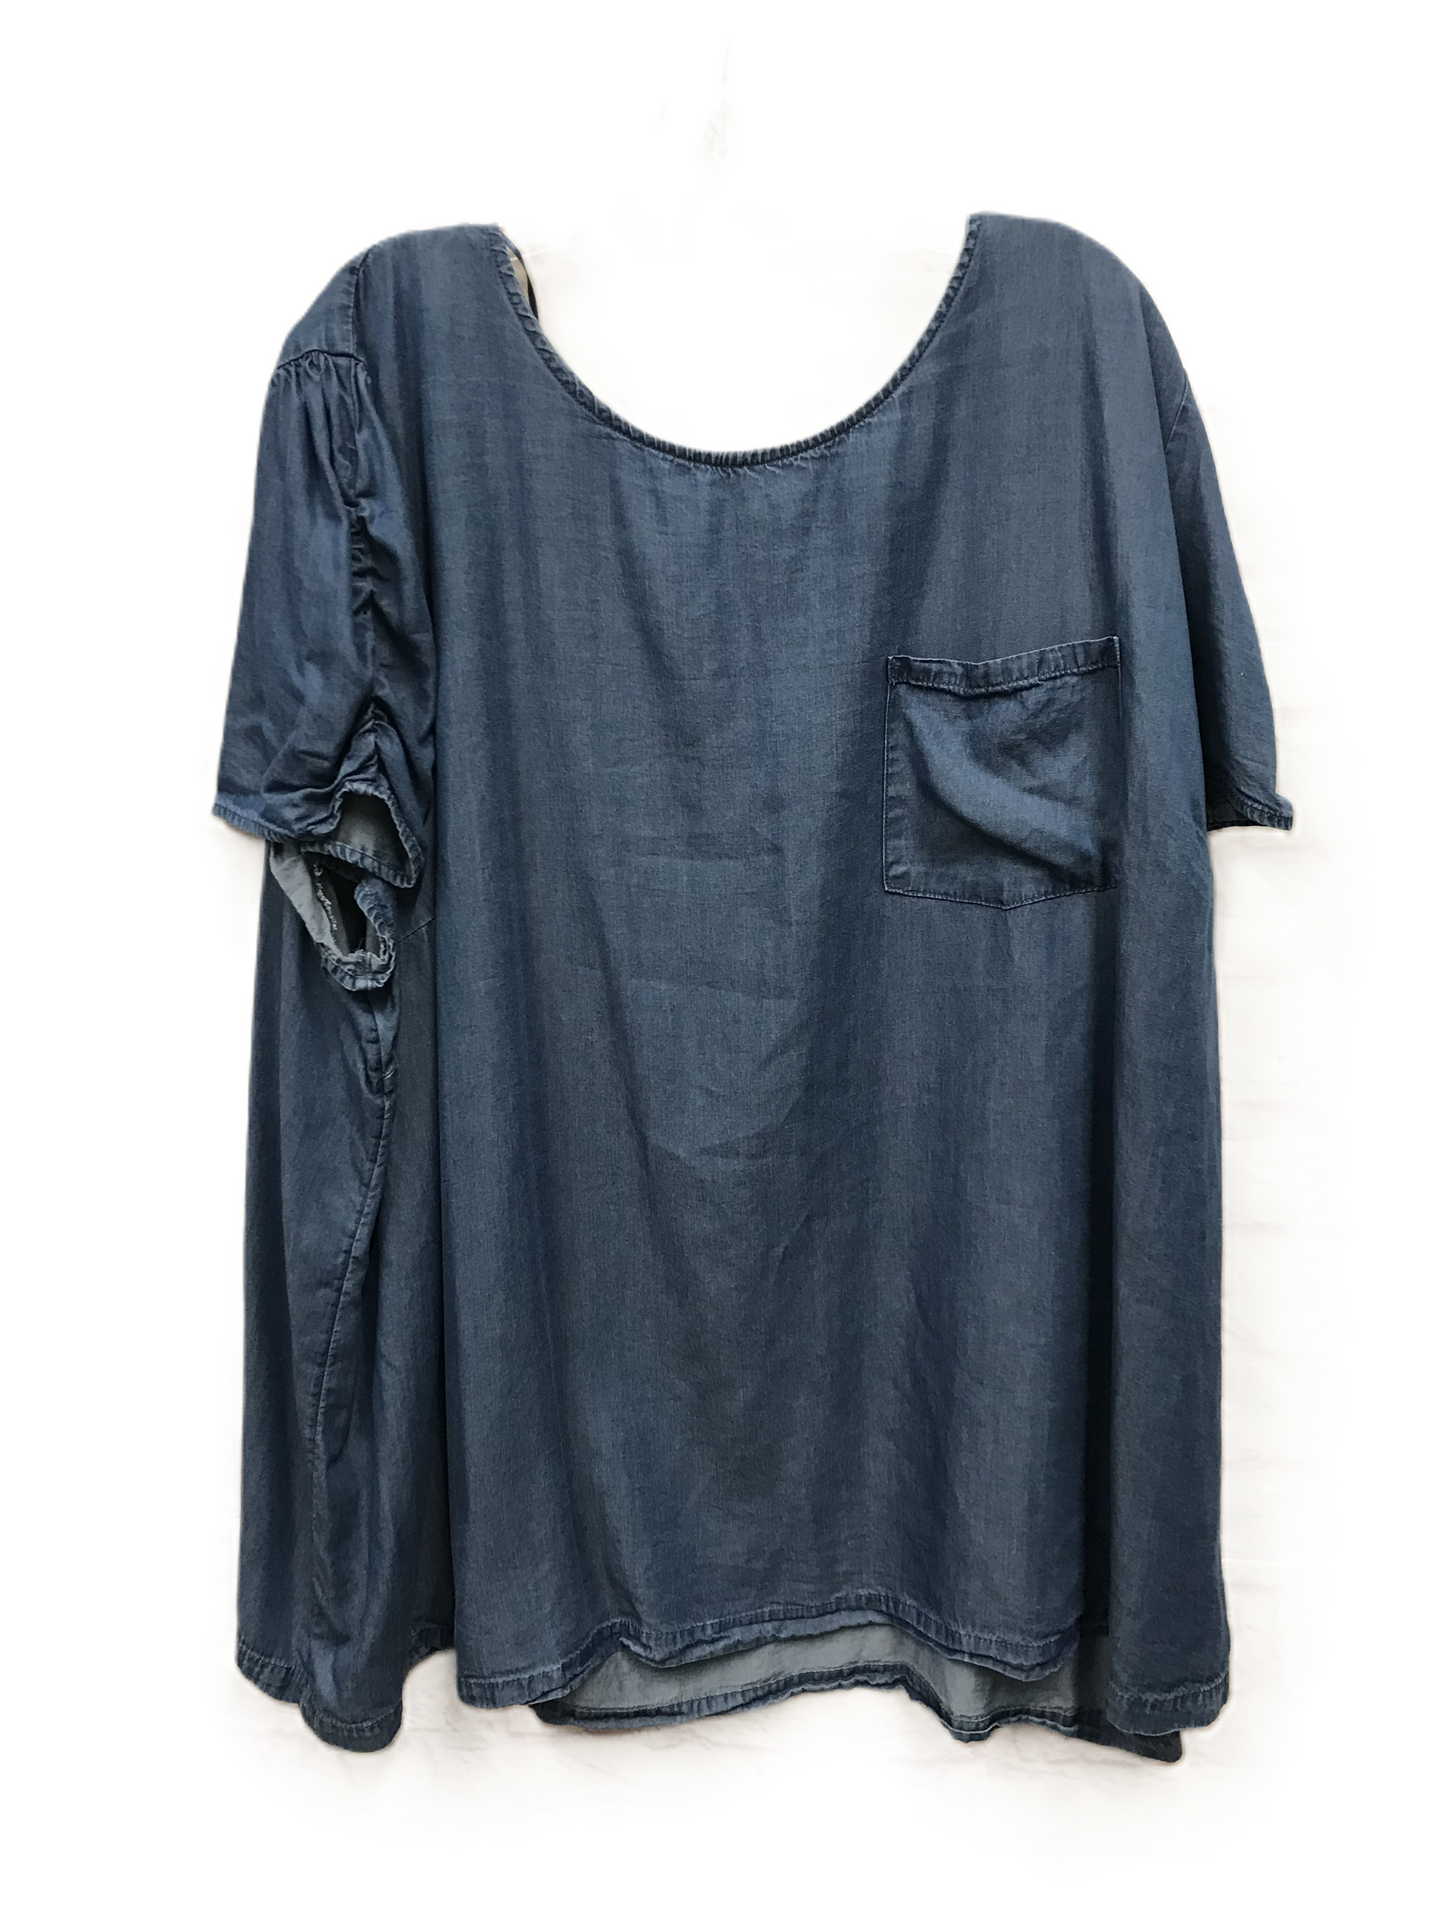 Blue Denim Top Short Sleeve By Lc Lauren Conrad, Size: 4x